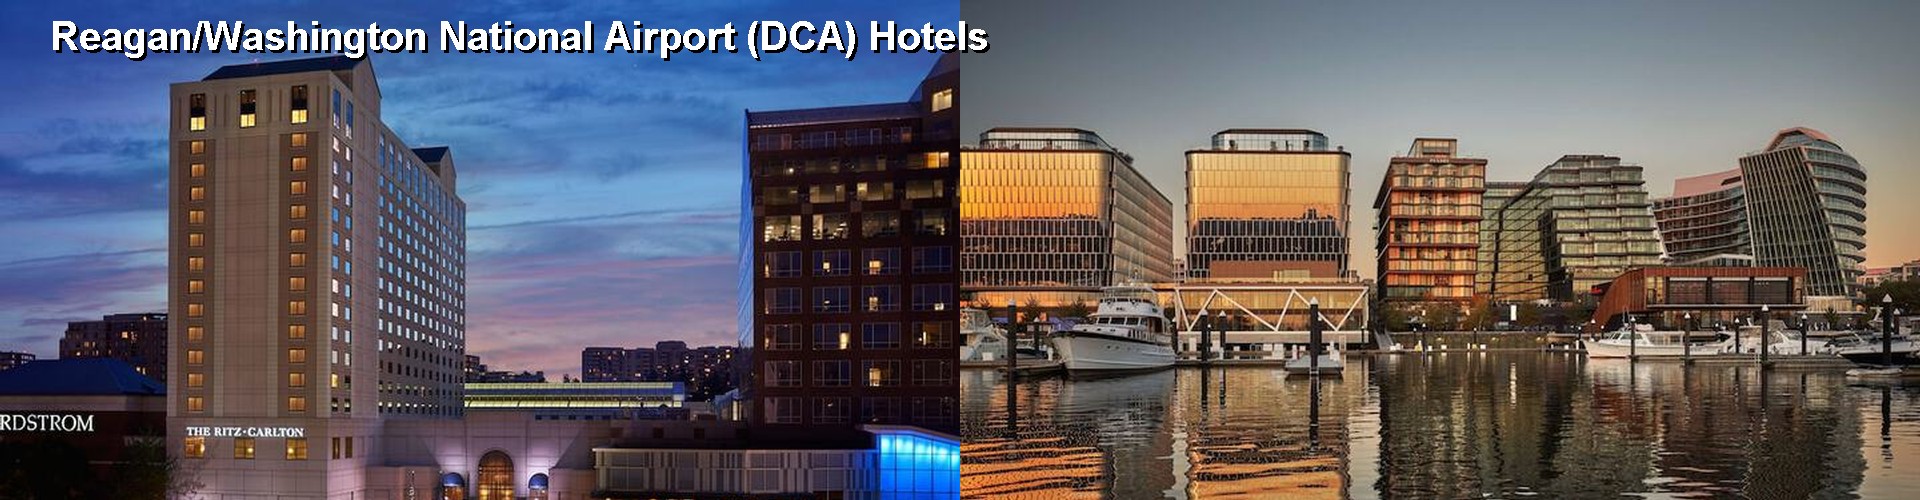 5 Best Hotels near Reagan/Washington National Airport (DCA)